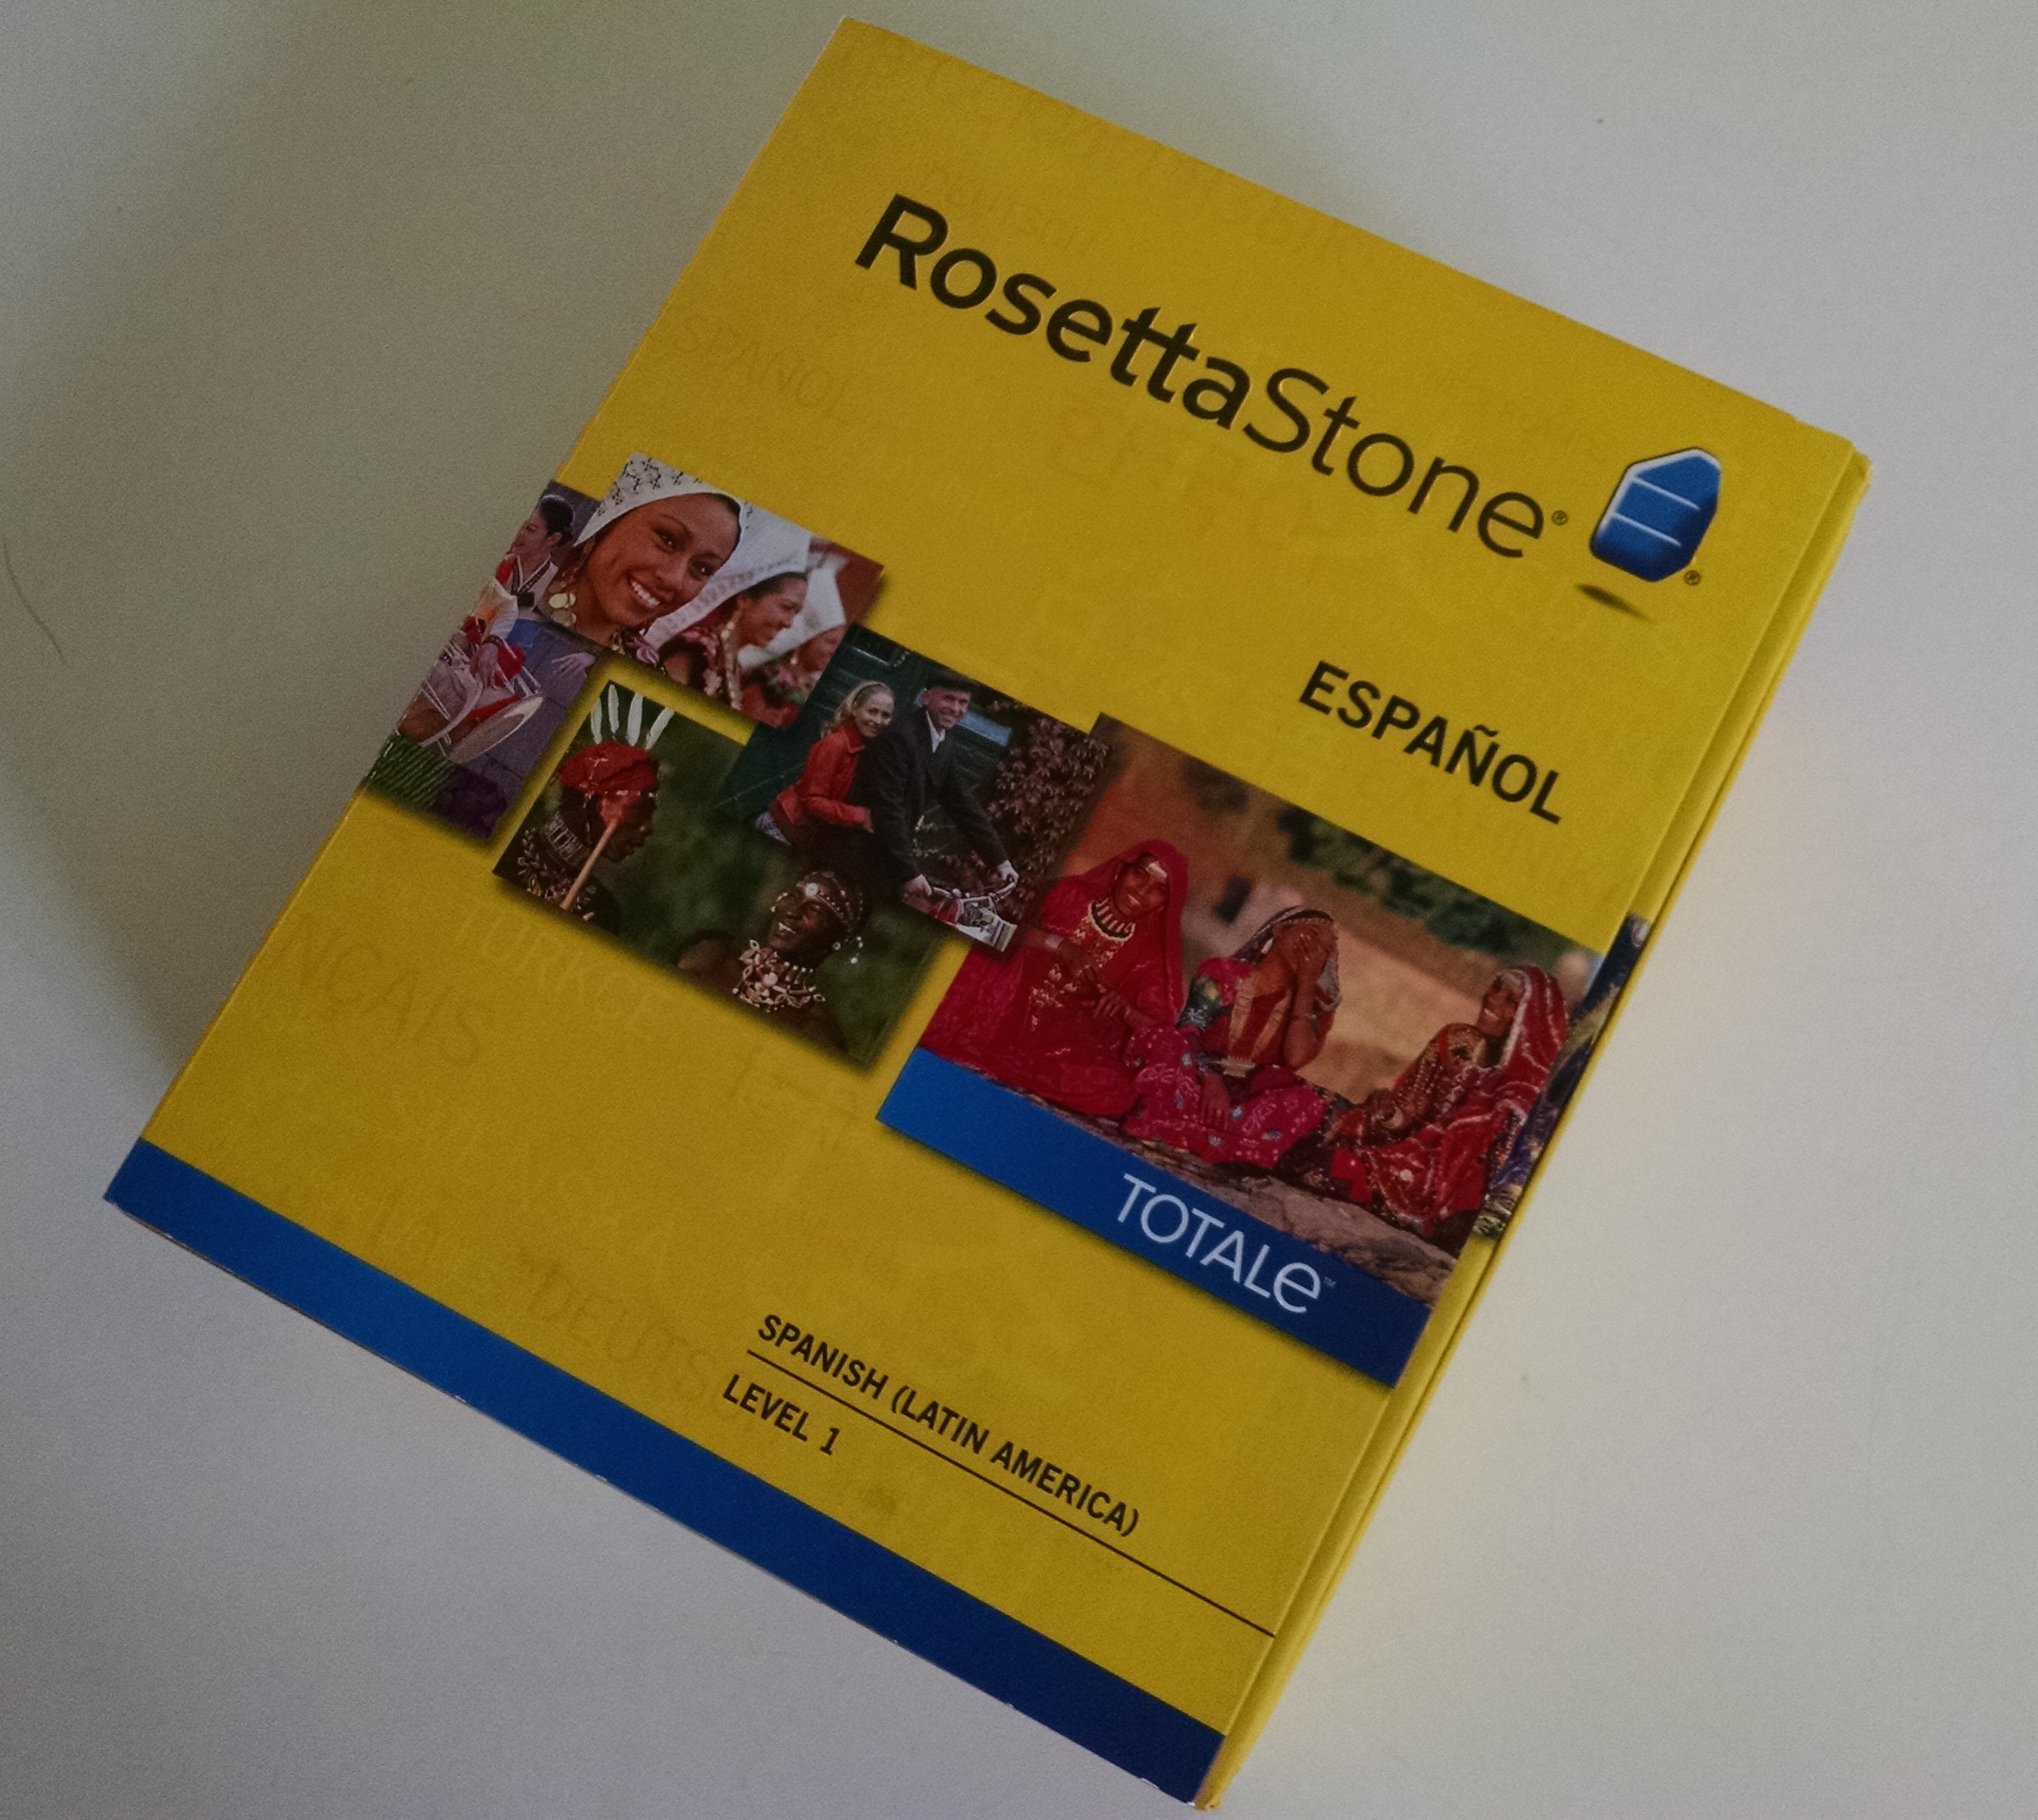 Gameforlanguage's image of purchased Rosetta Stone course